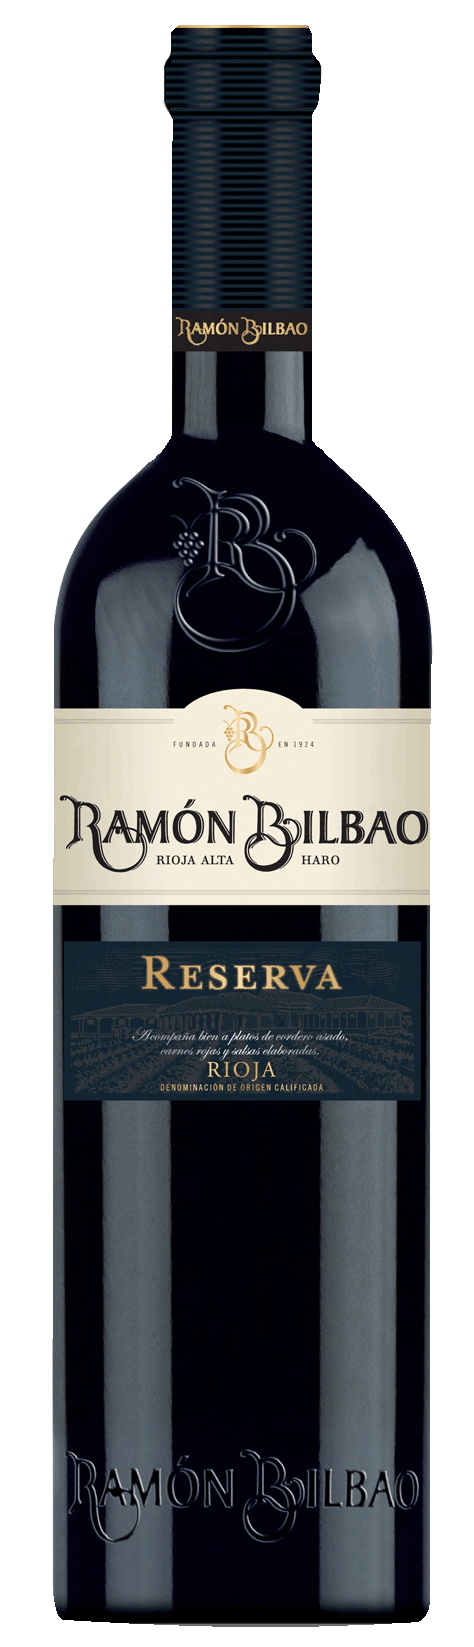 FLES RAMON BILBAO RESERVA 0.75 LTR.-0